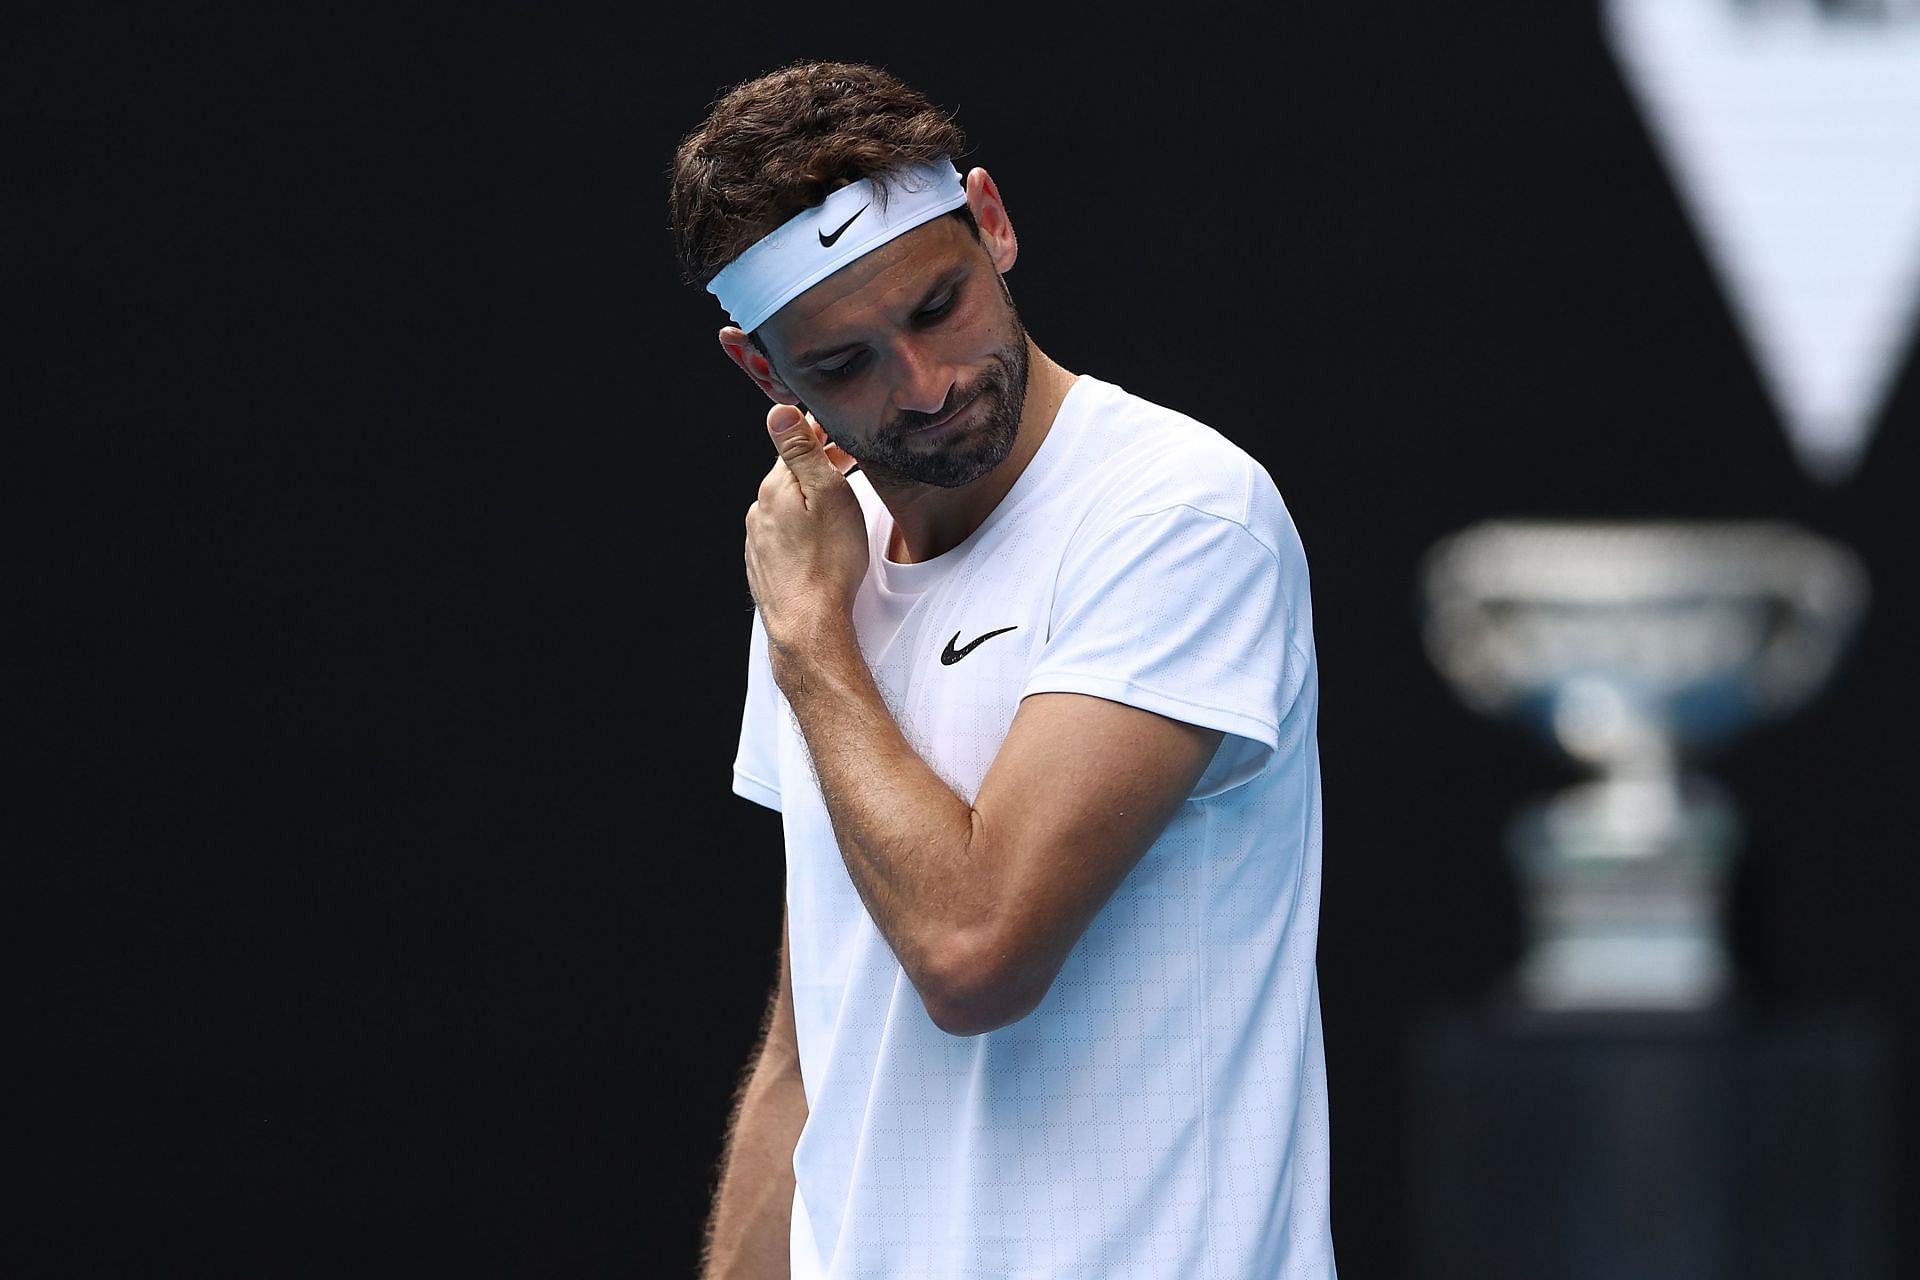 Grigor Dimitrov at the 2021 Australian Open.